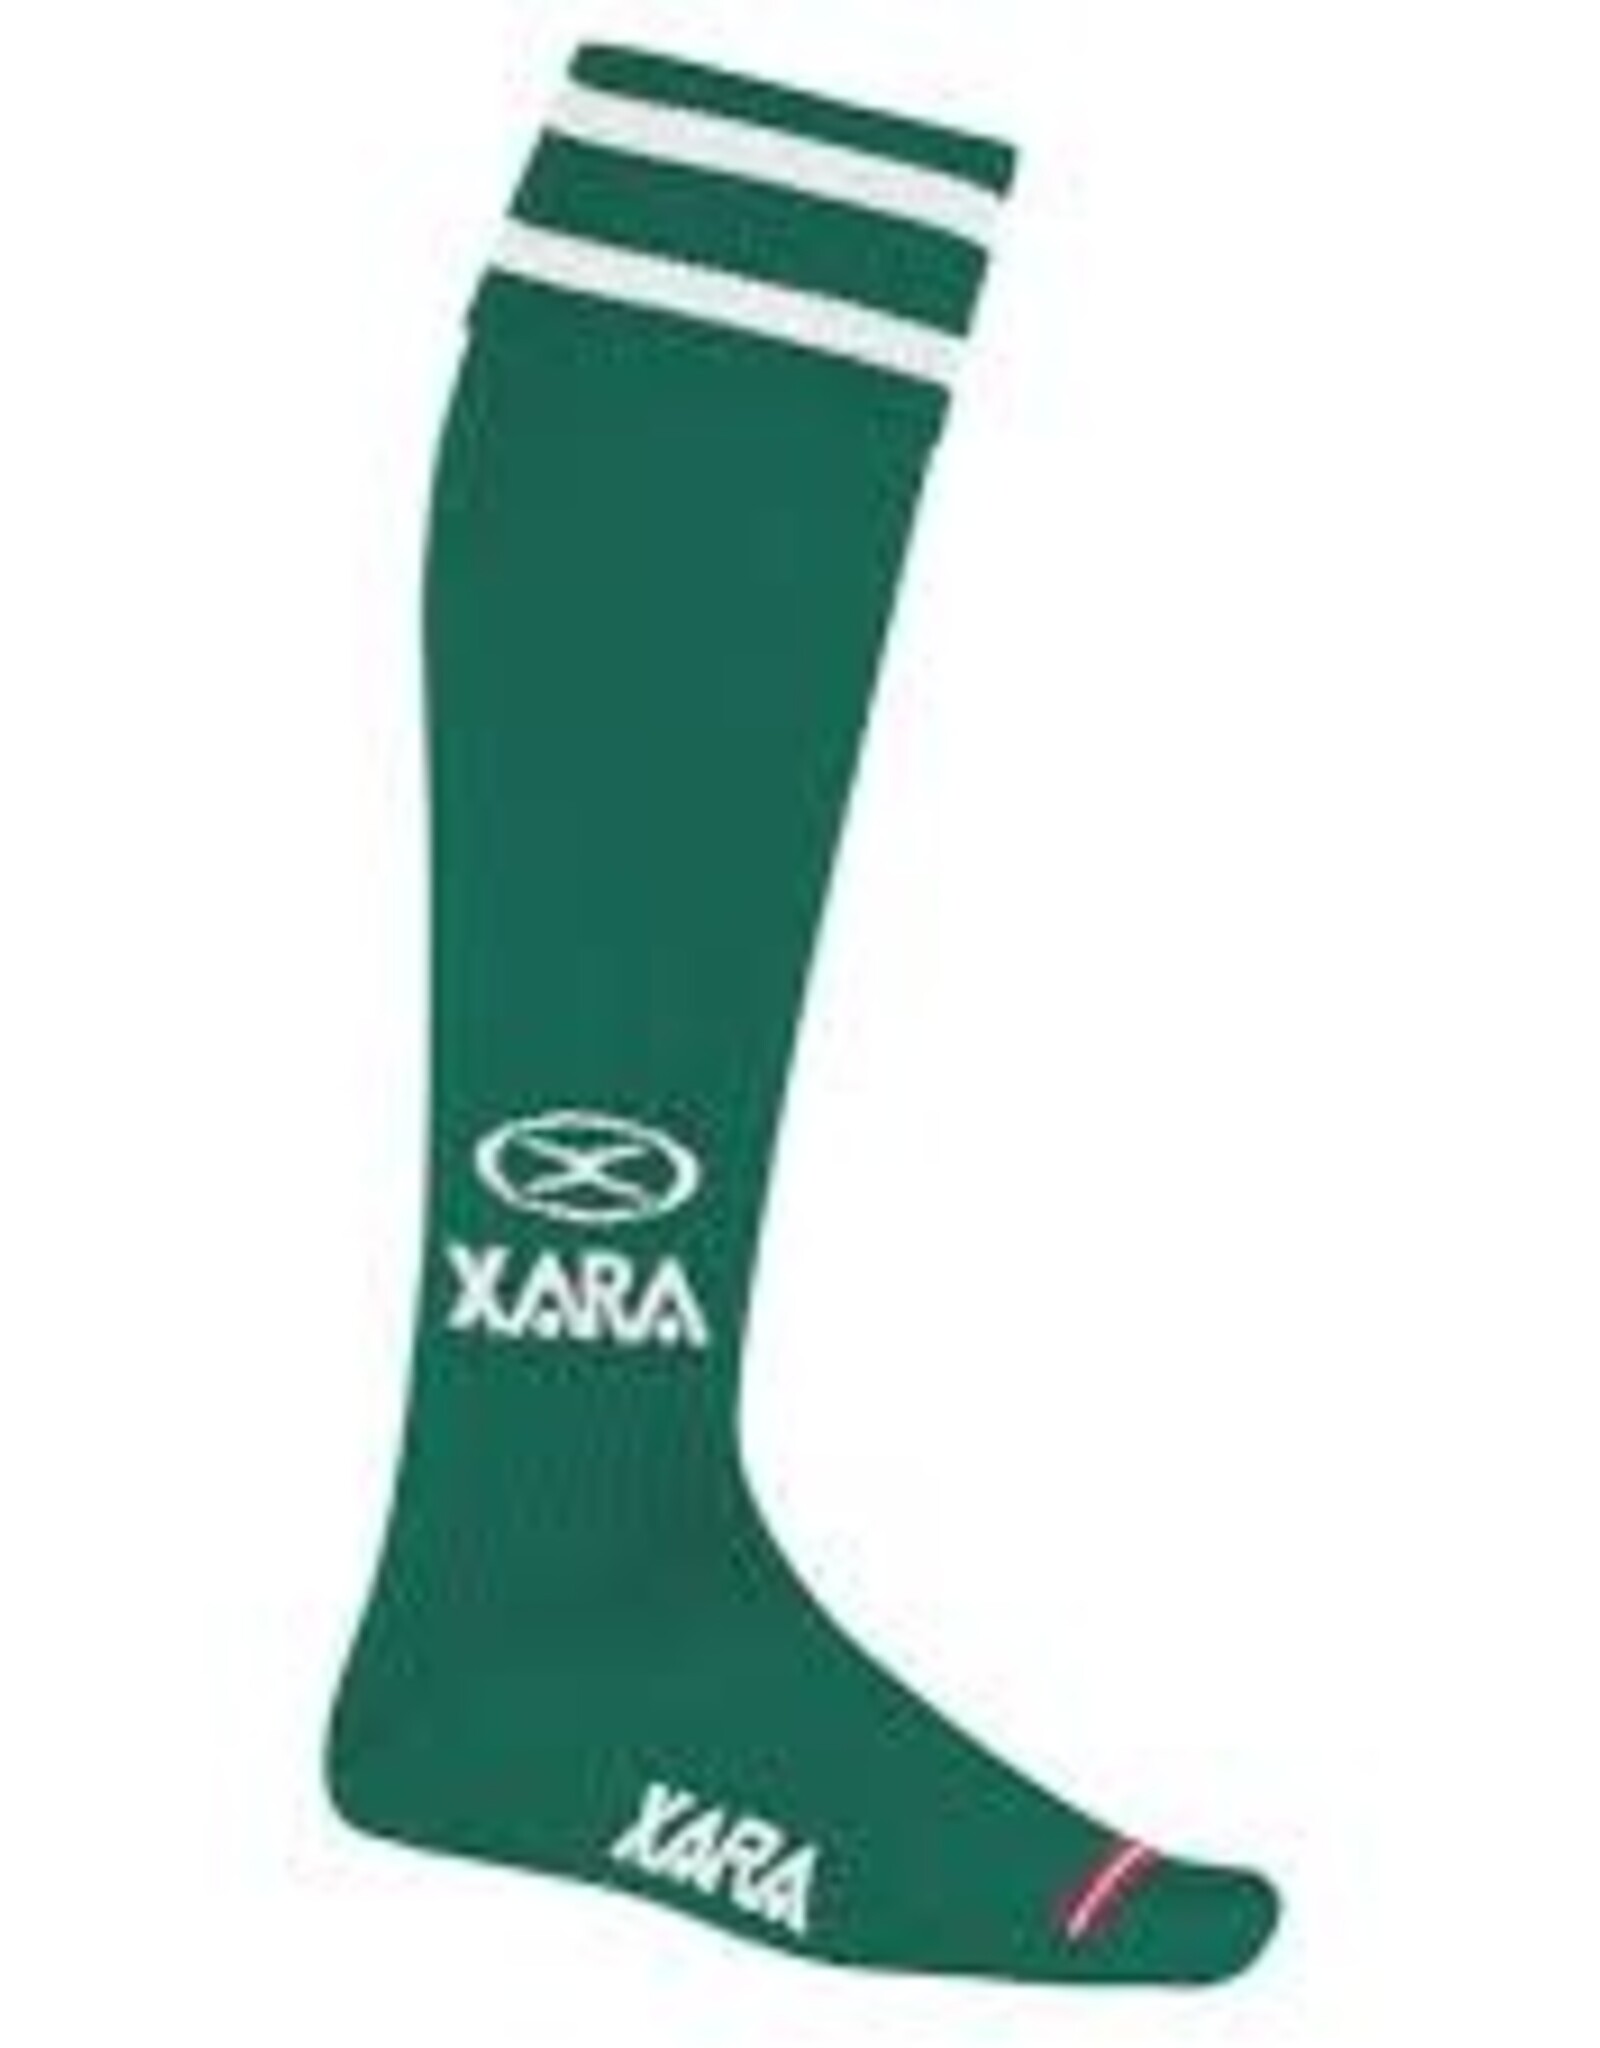 Xara Performance Socks - Green/White - ADULT